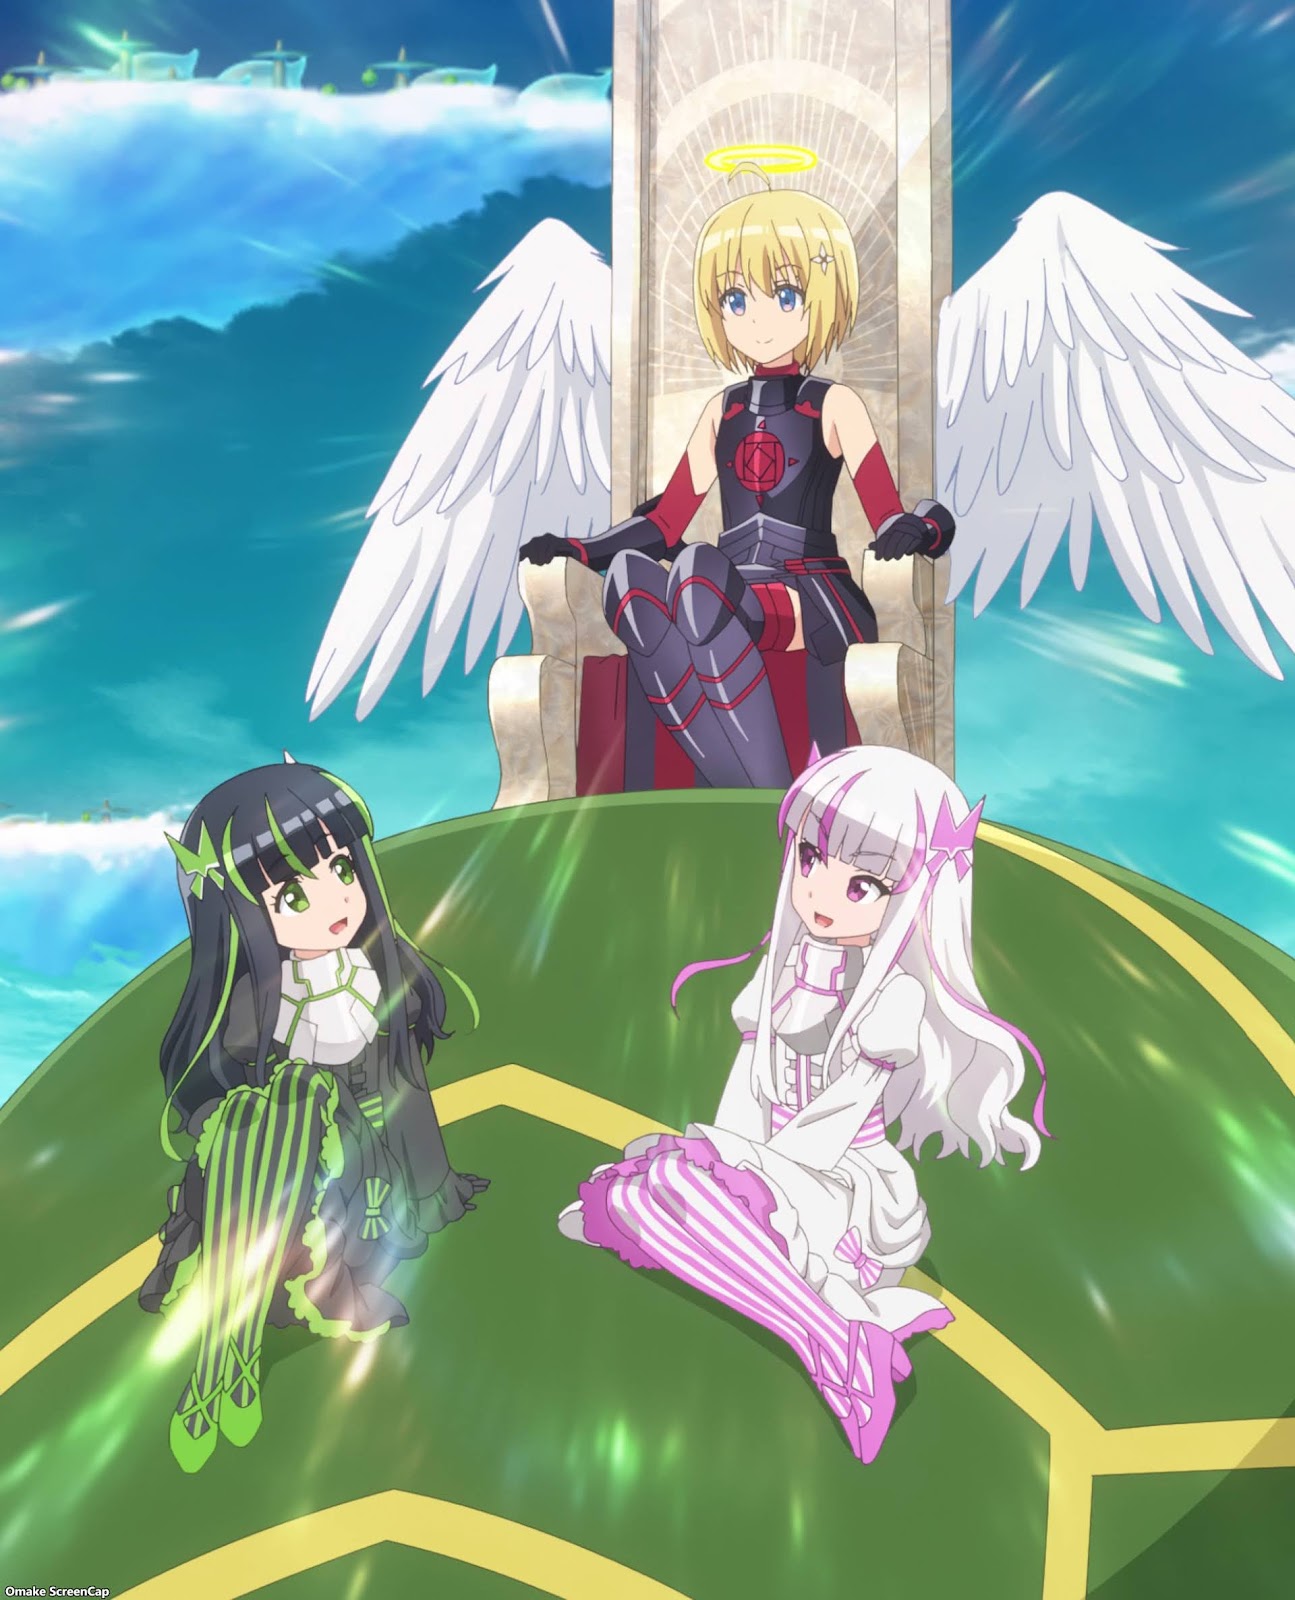 Bofuri: The Cute Gaming Adventure Comedy Anime Gets Second Season – OTAQUEST